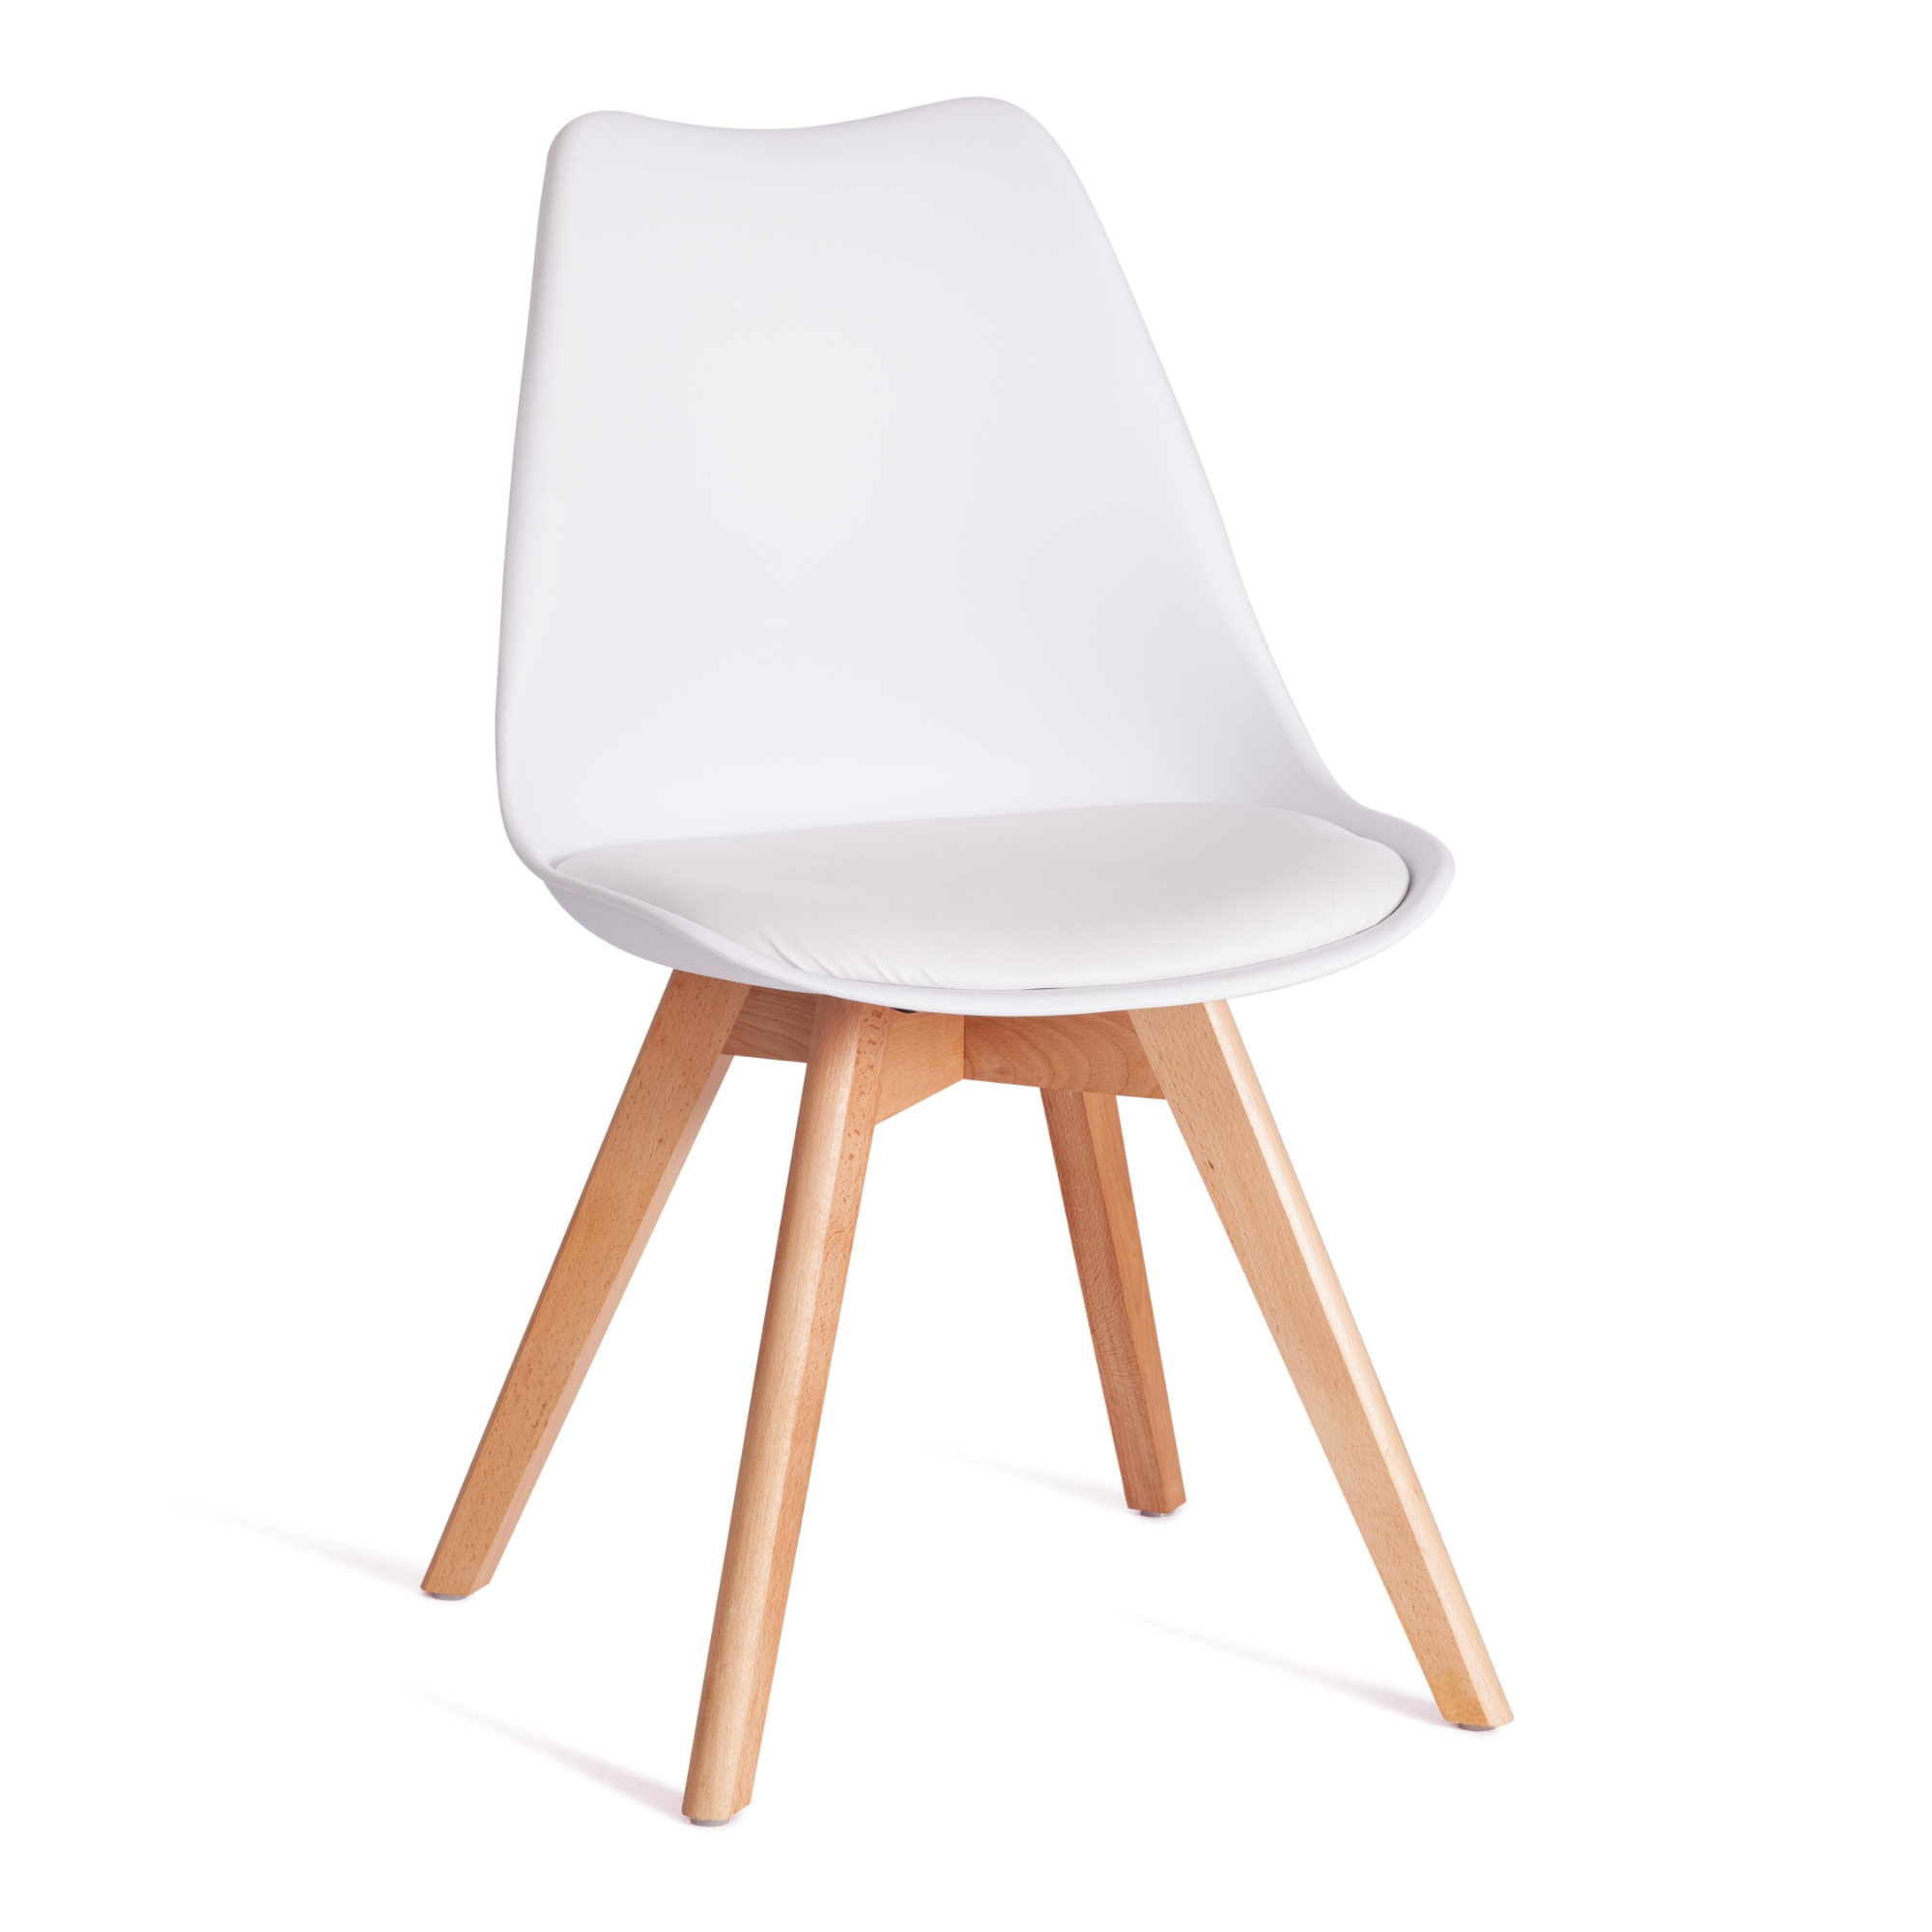 стул для кухни harbour пластик серый ножки дерево Стул ТС белый из дерева, пластика, экокожи 47,5x55x80 см